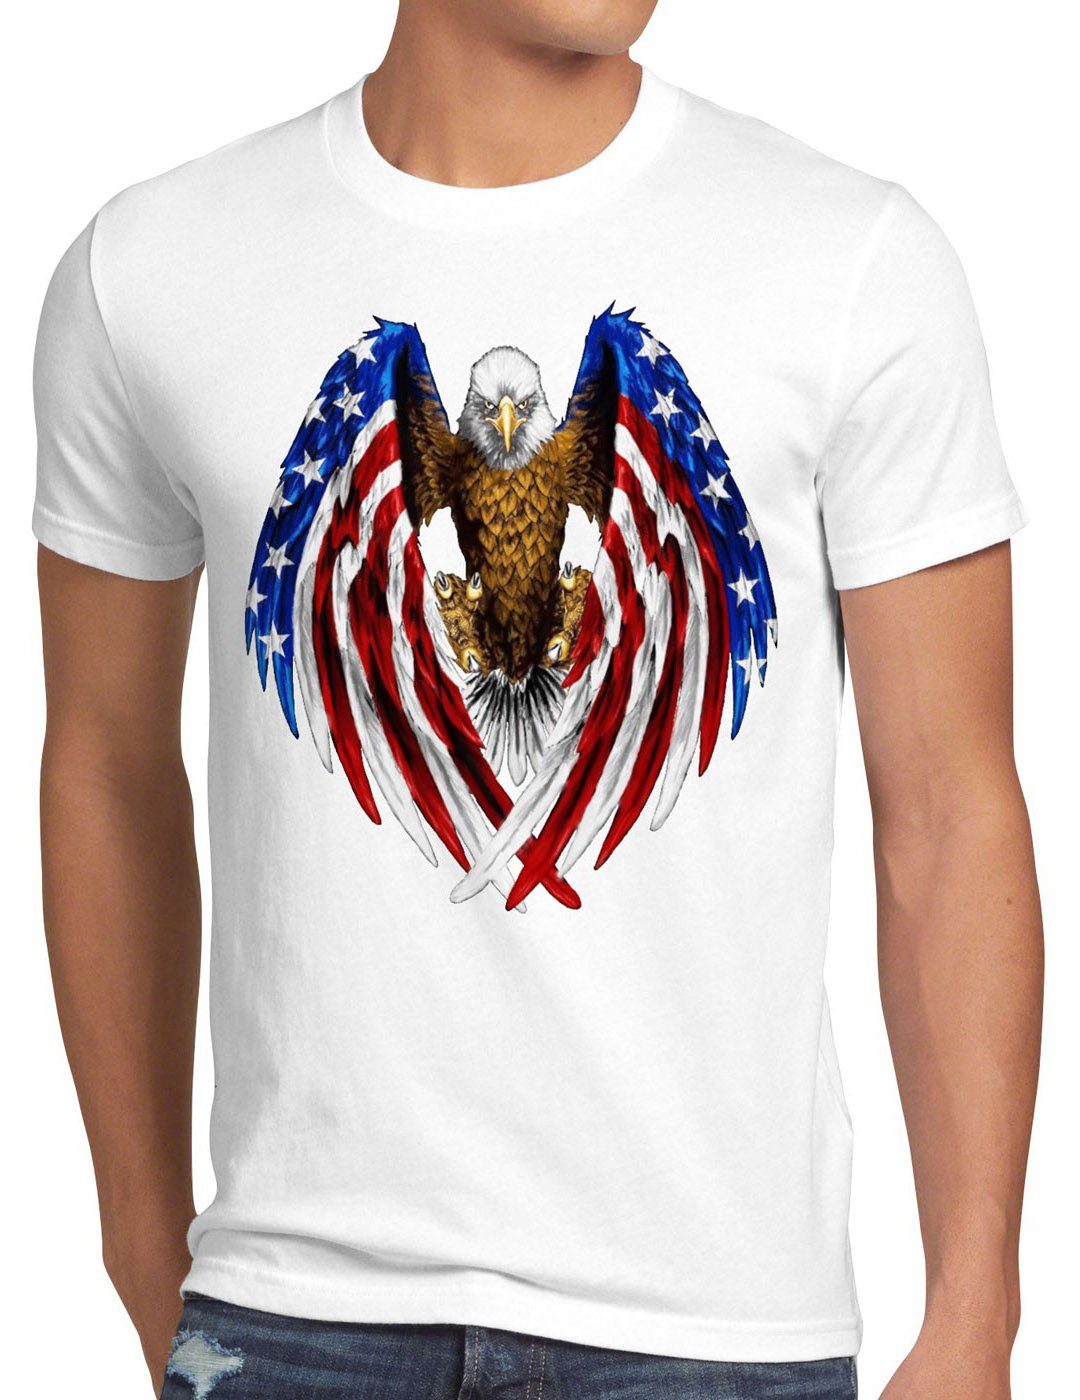 style3 Print-Shirt Herren T-Shirt US flagge stripes weiß america and usa unites 4. juli of stars adler states